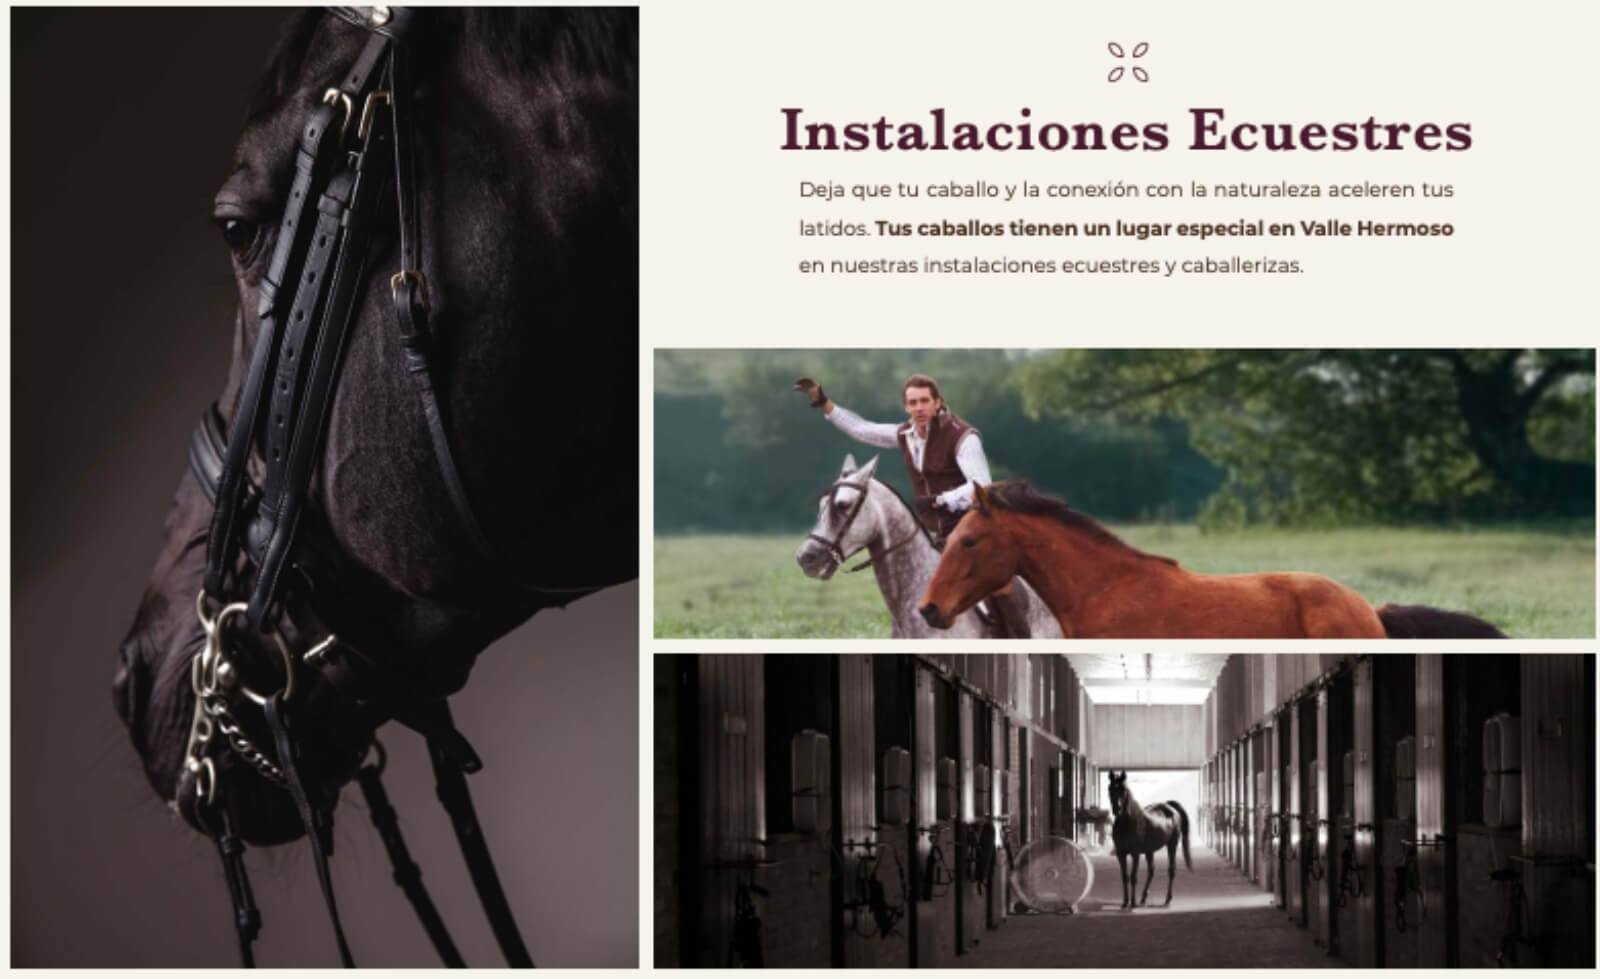 2,588 m2 lot in luxury community with amenities, for sale San Miguel de Allende.